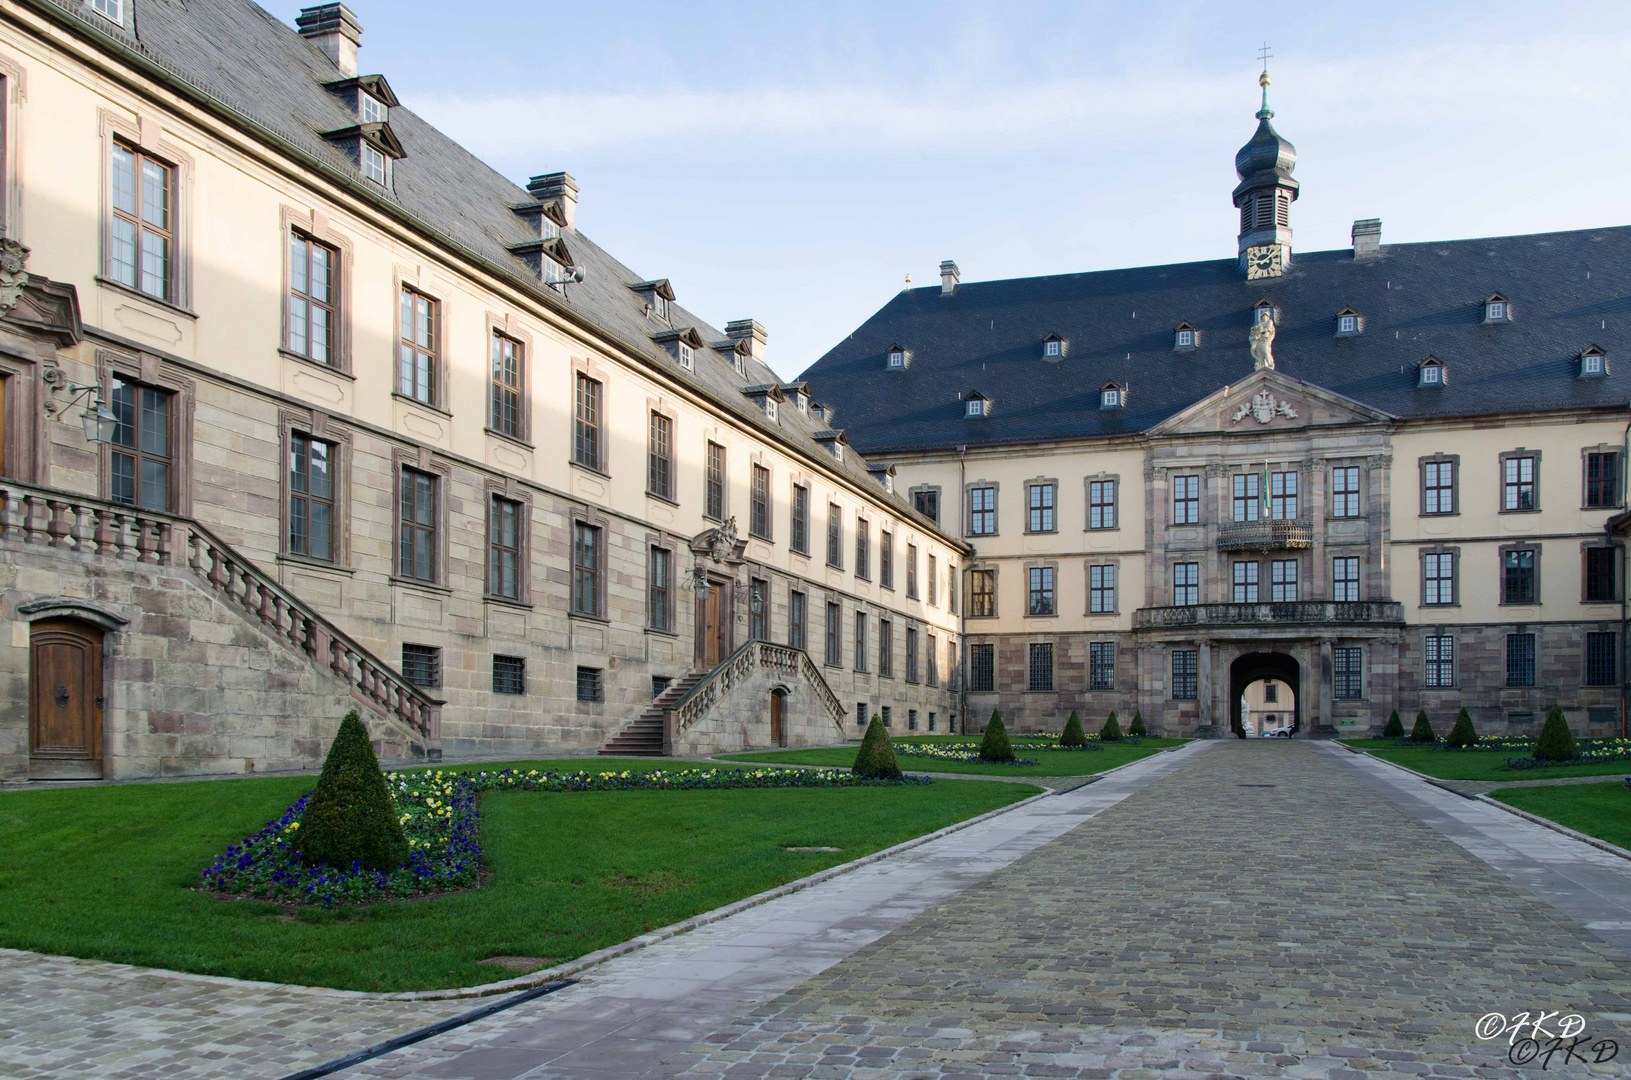 Fulda-Stadtschloss-Standesamt